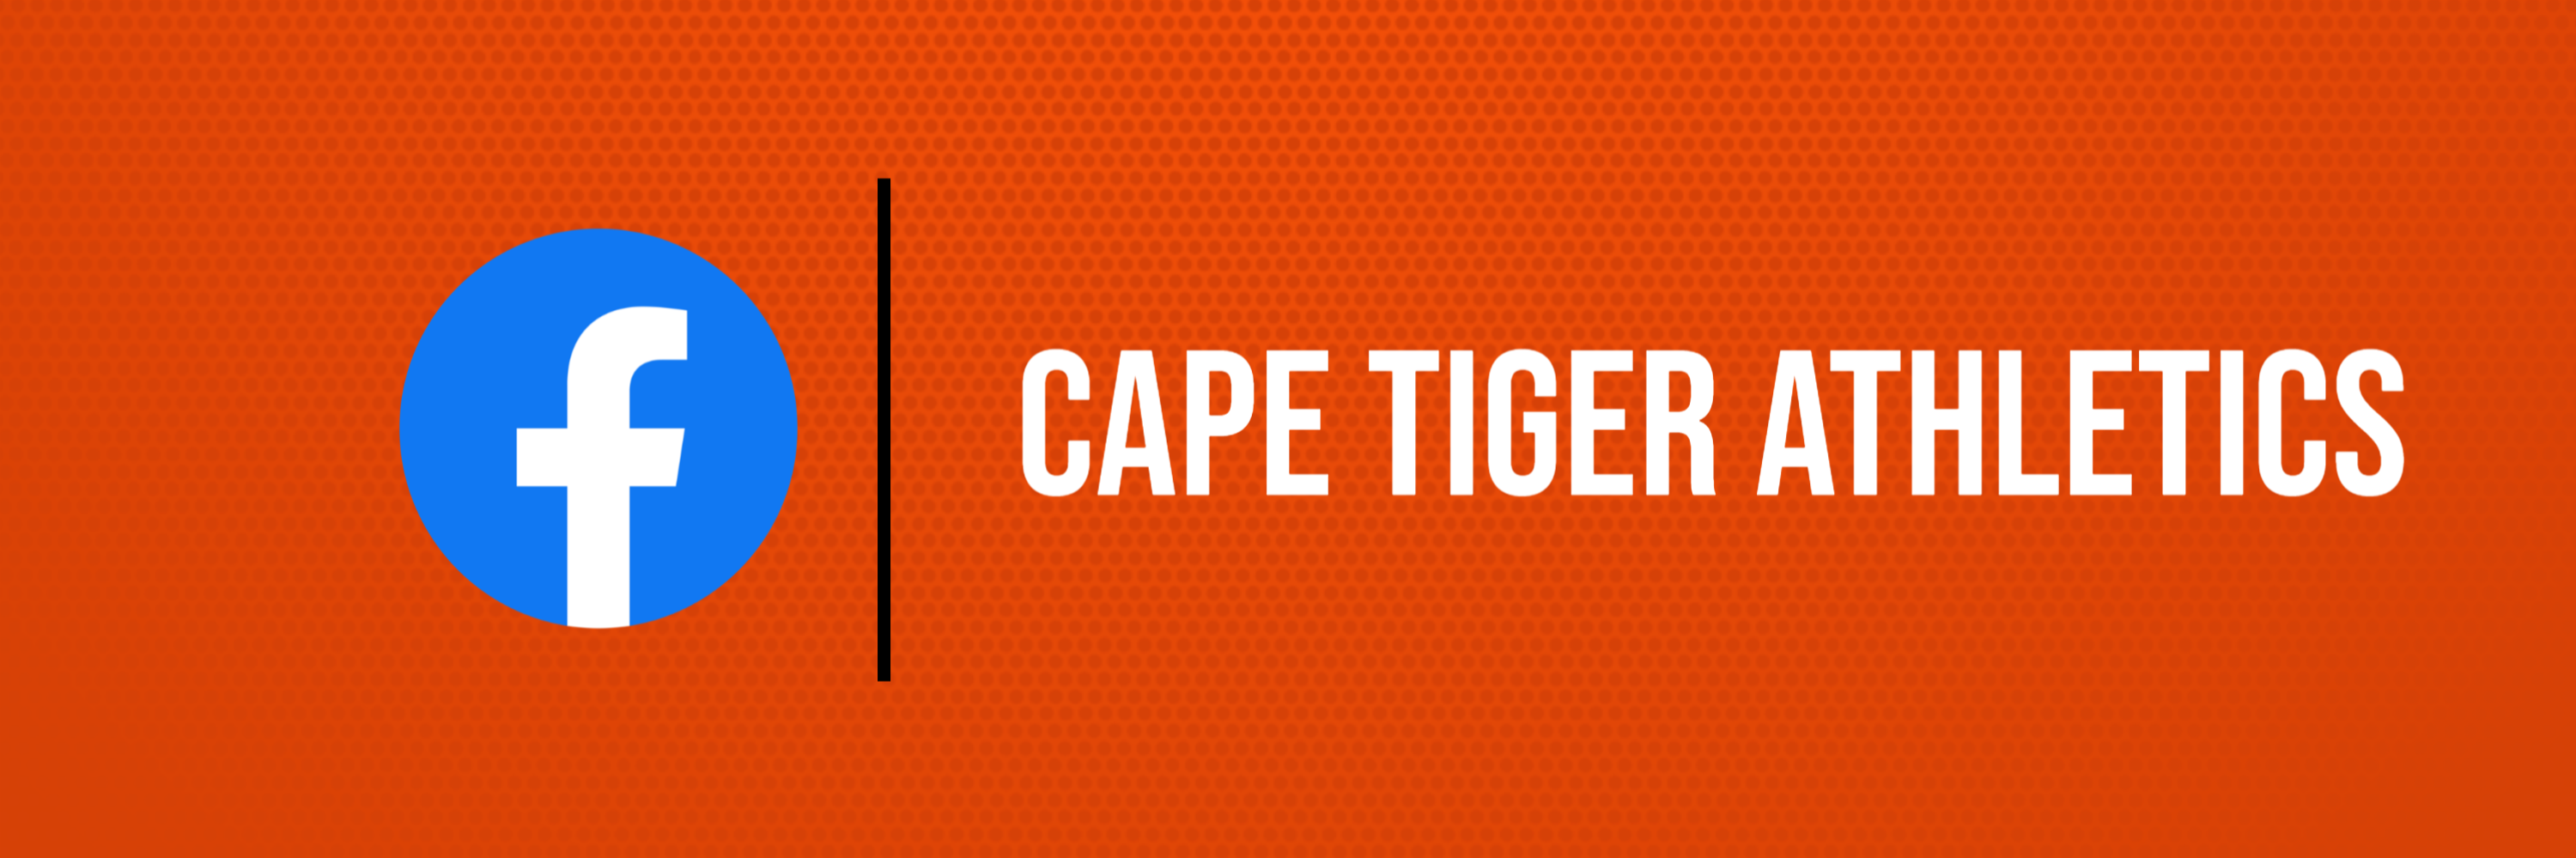 Cape Tiger Athletics Facebook